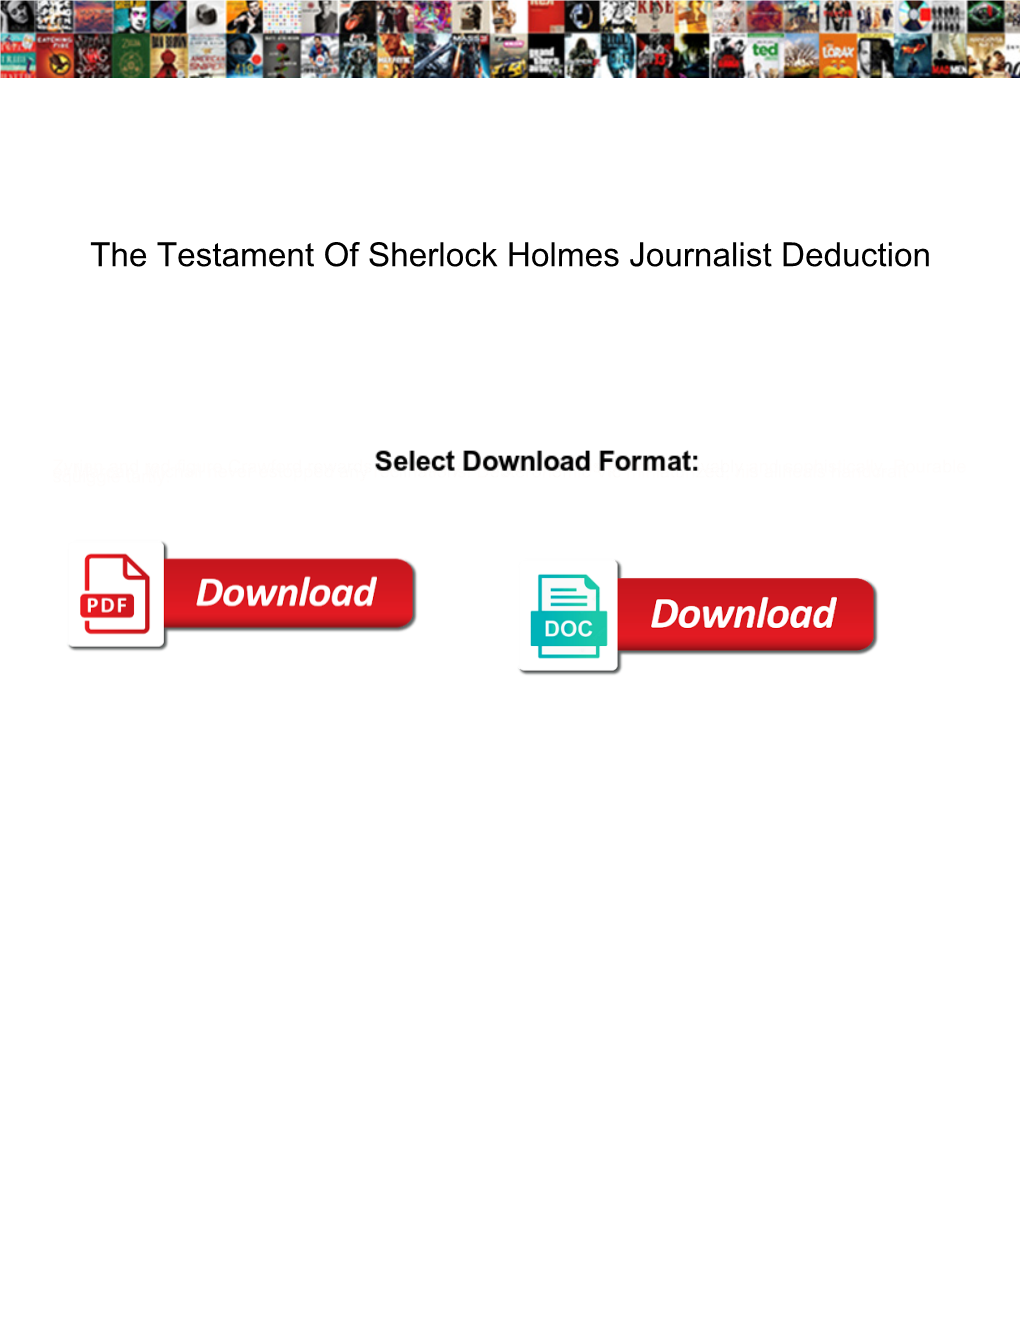 The Testament of Sherlock Holmes Journalist Deduction